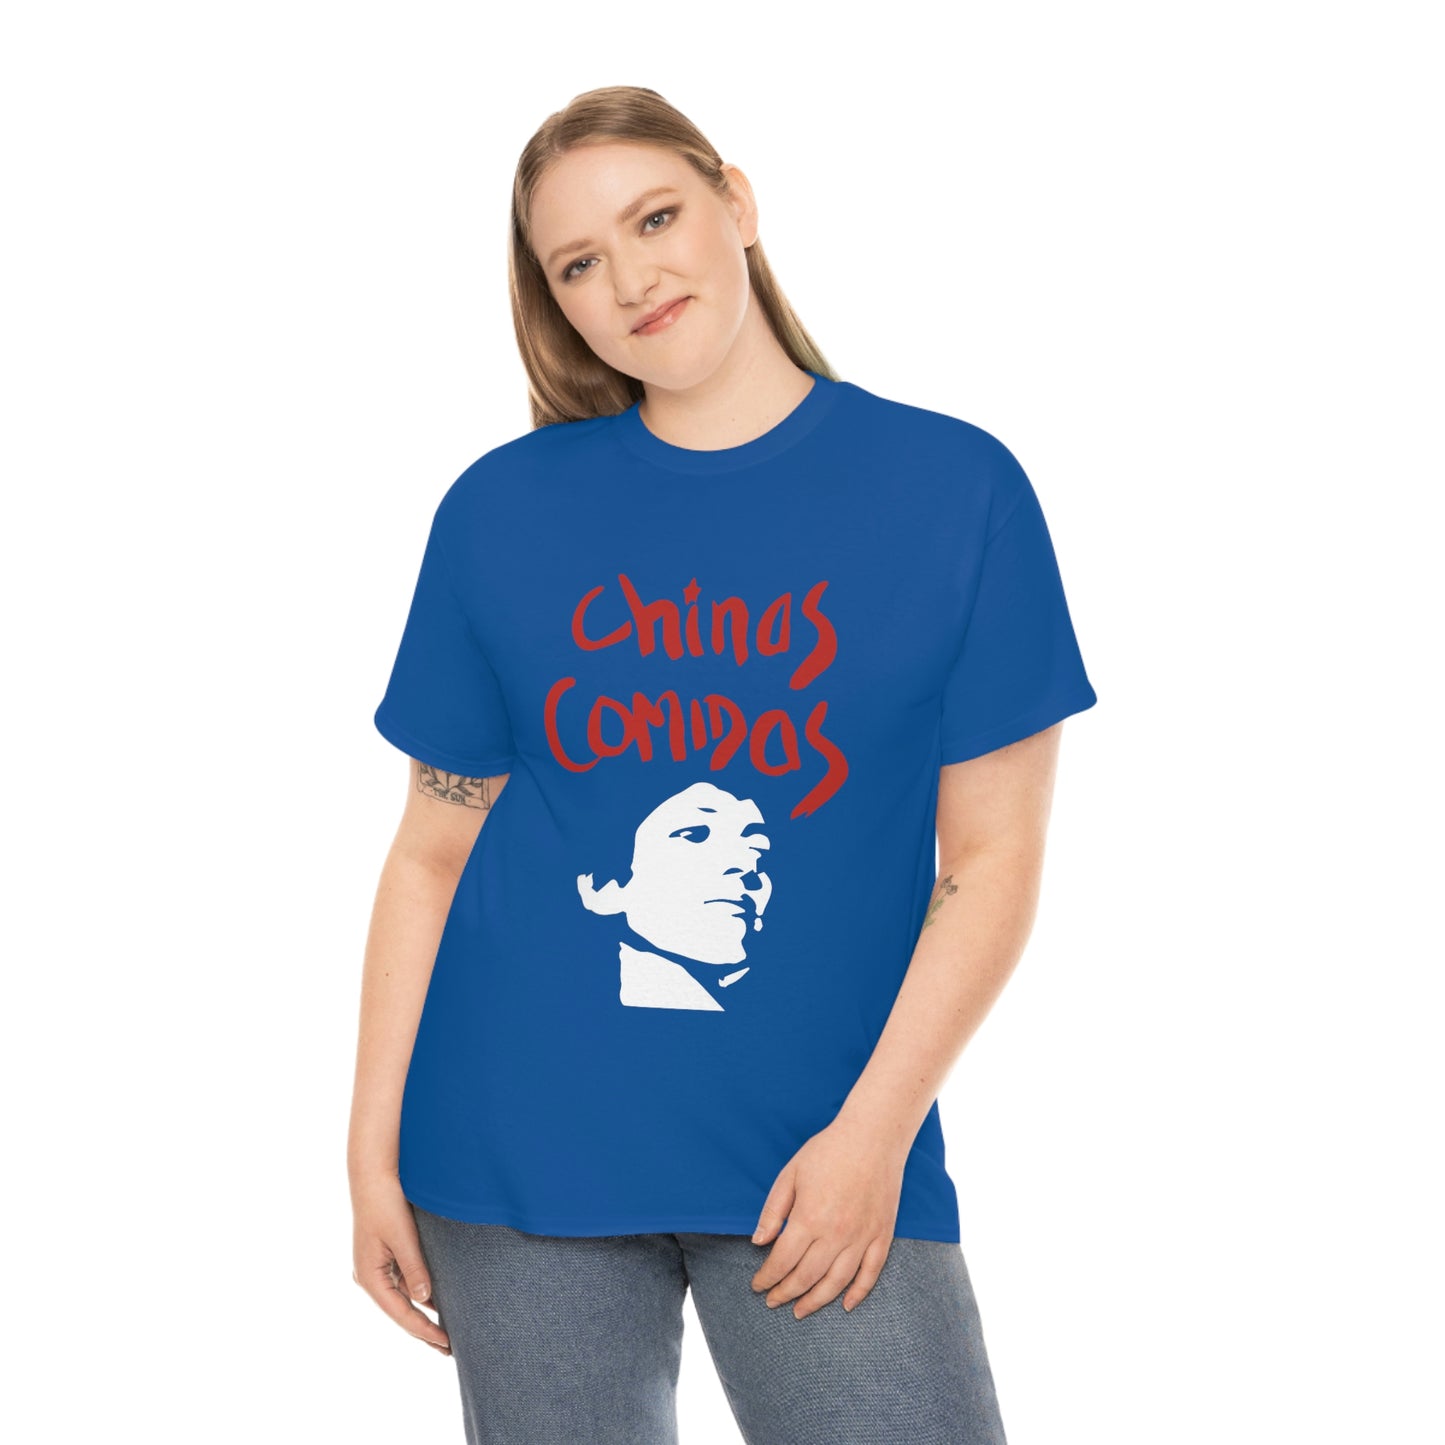 CHINAS COMIDAS Unisex Cotton T-Shirt